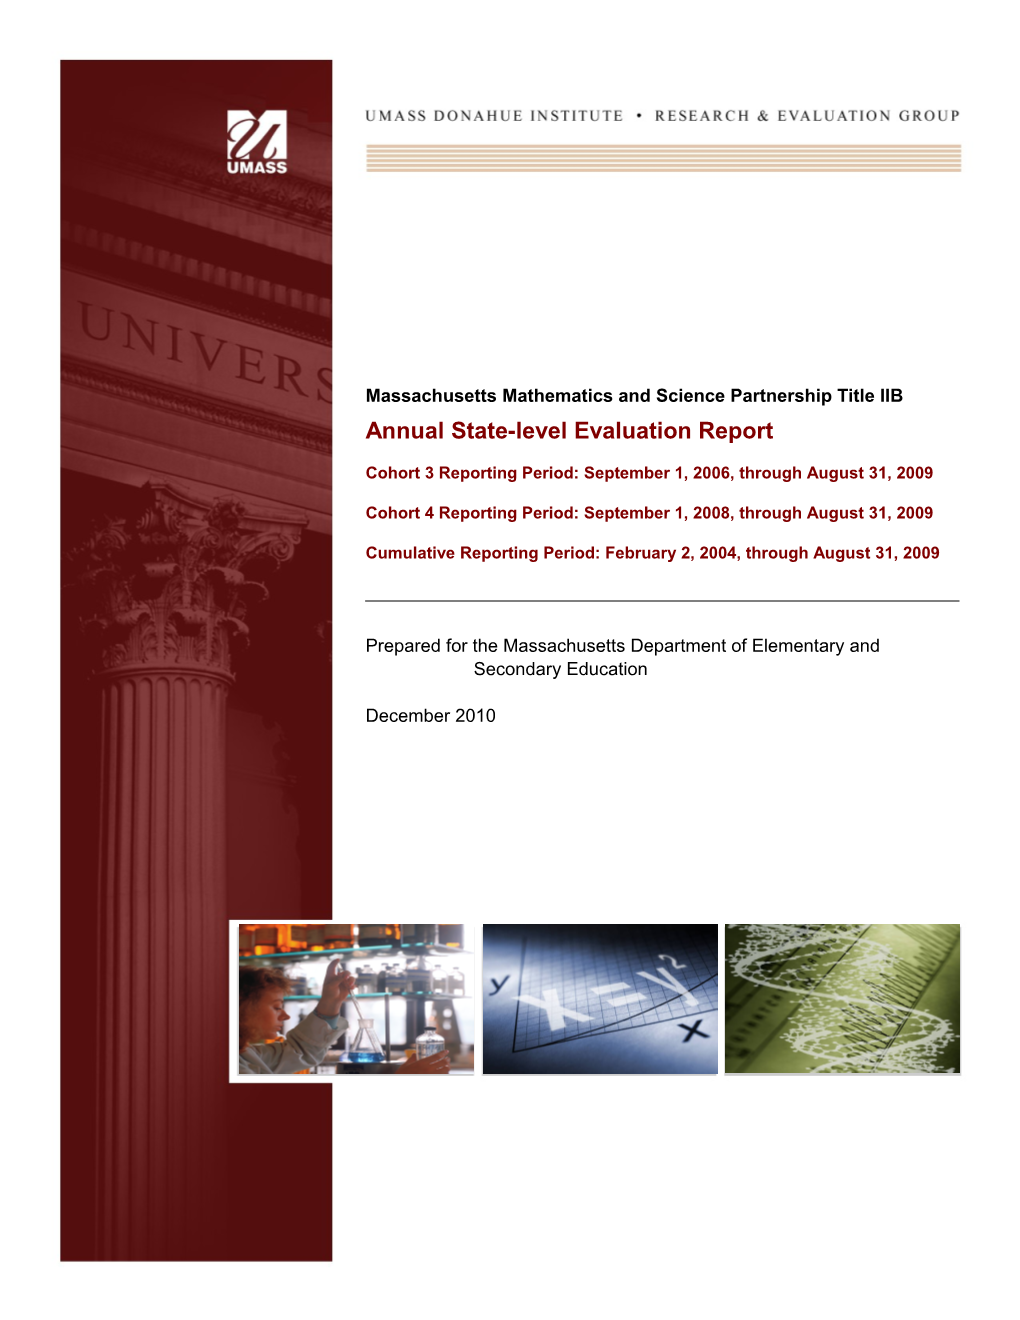 MMSP Title IIB 2004-09 Cumulative Evaluation Report